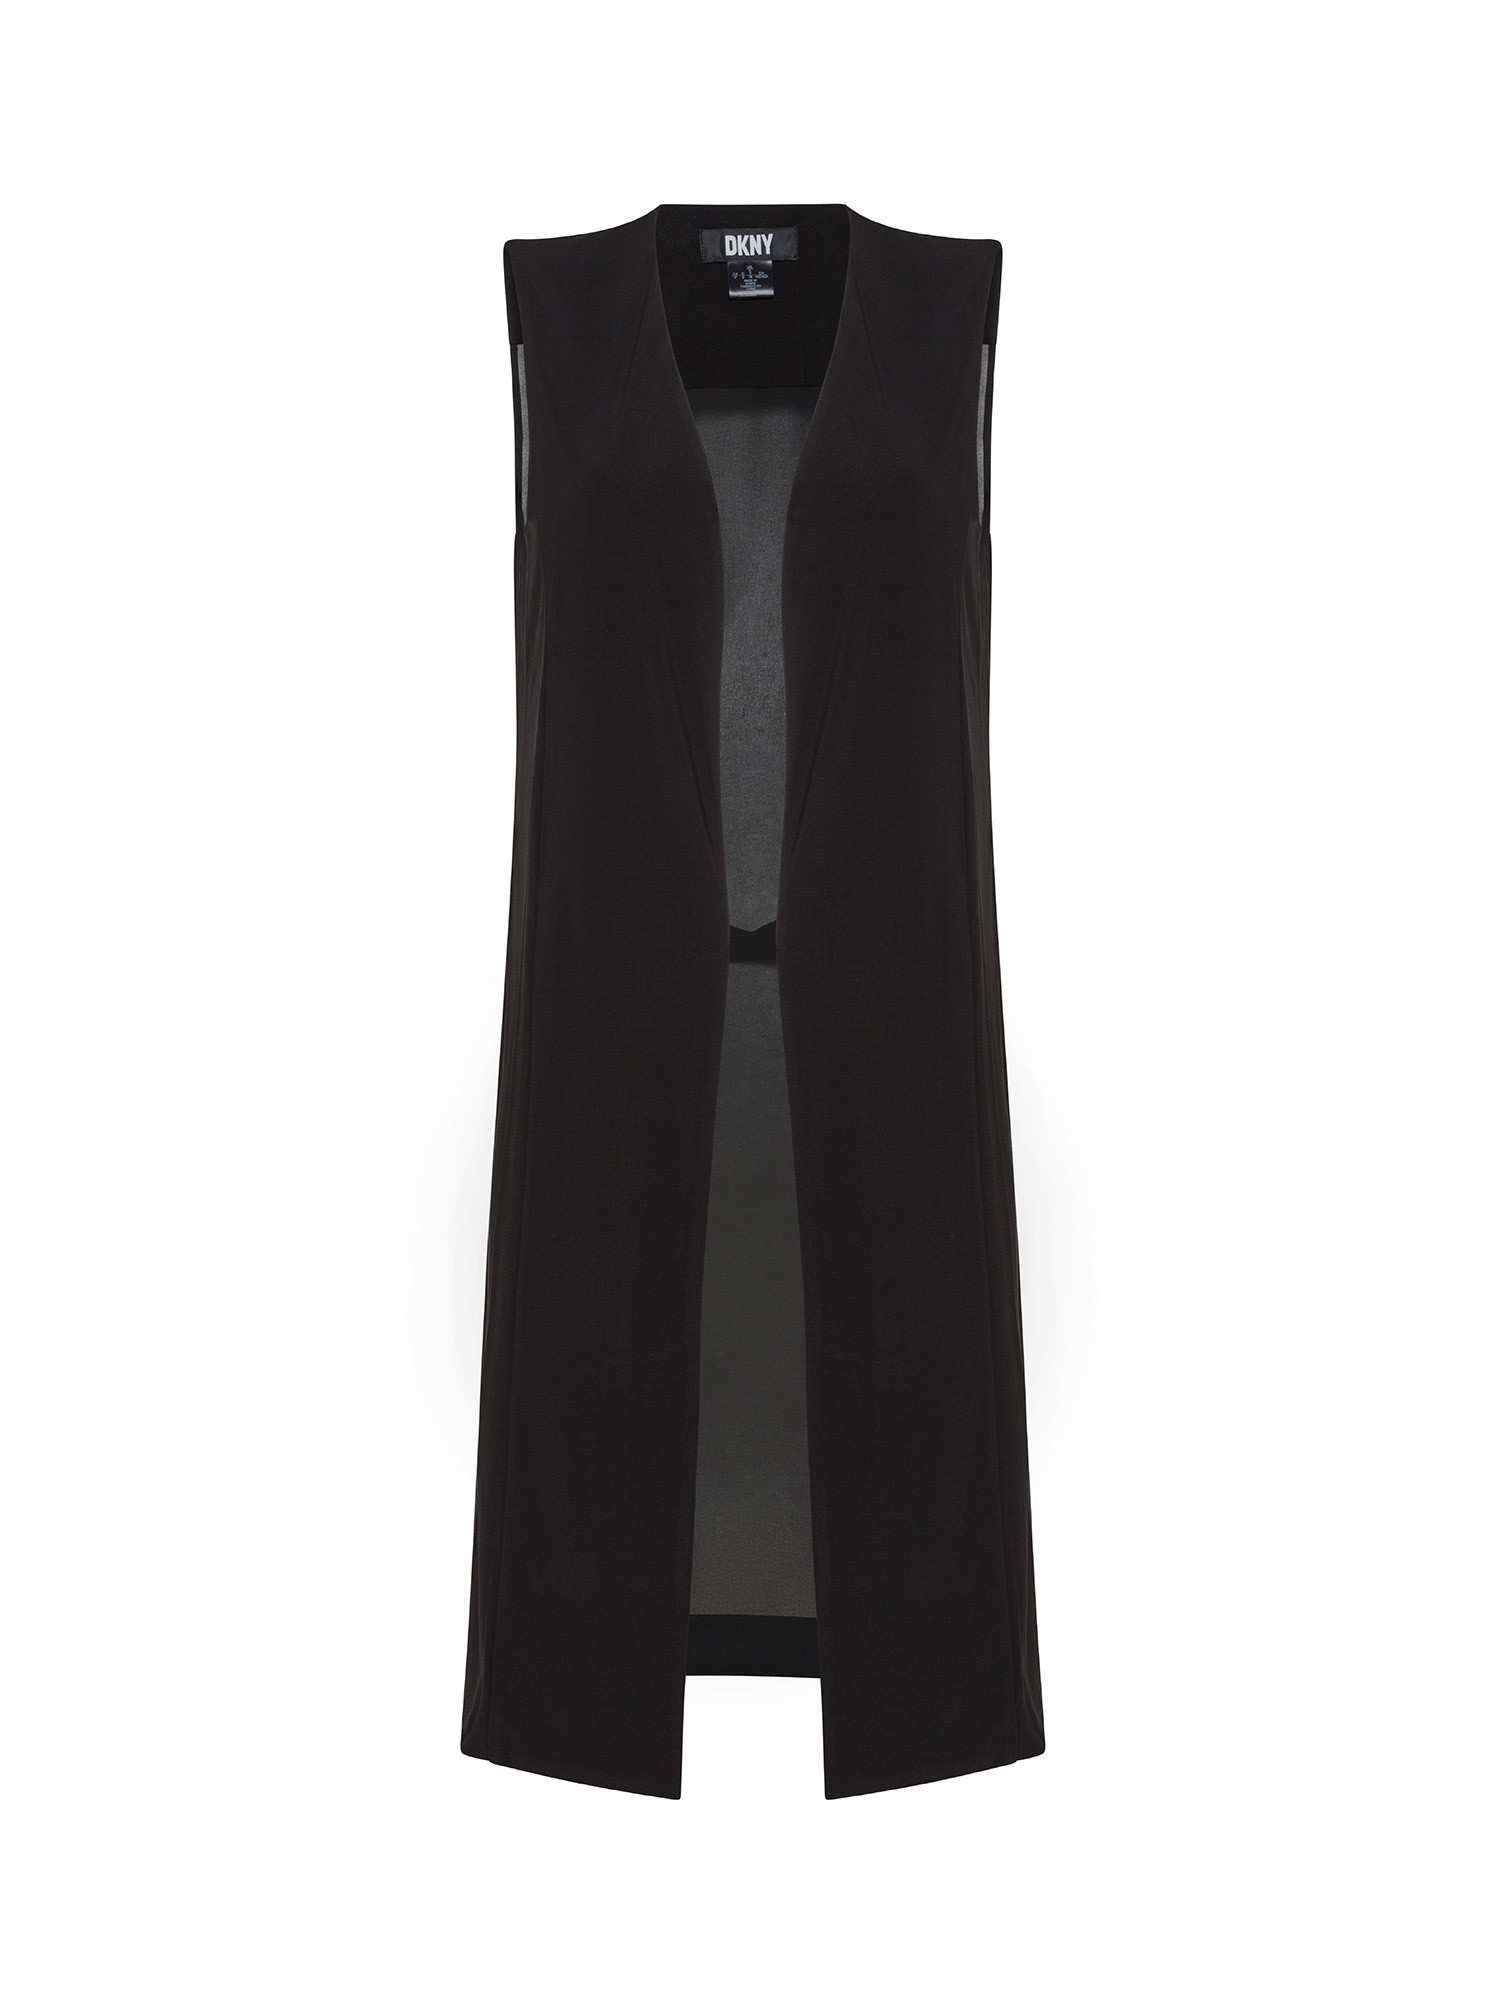 DKNY - Long cardigan with chiffon back, Black, large image number 0